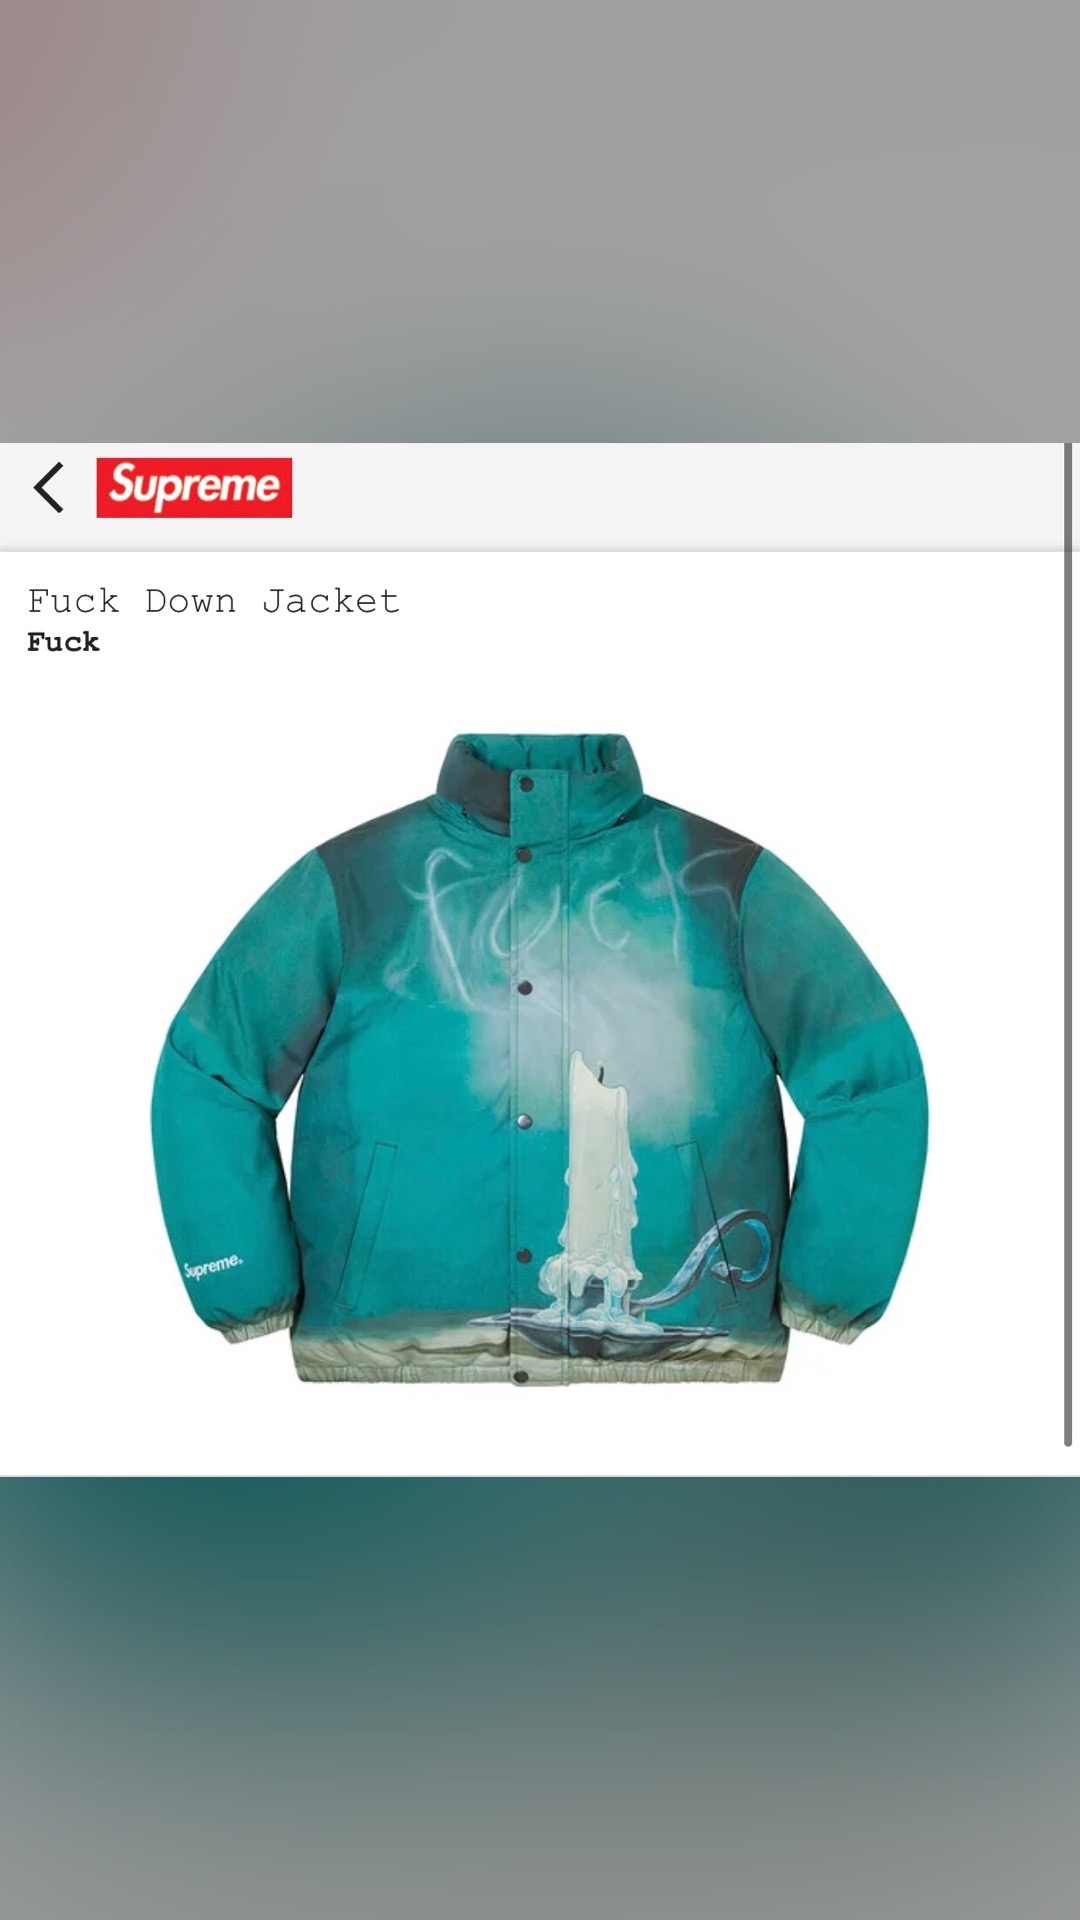 Supreme fuck down jacket